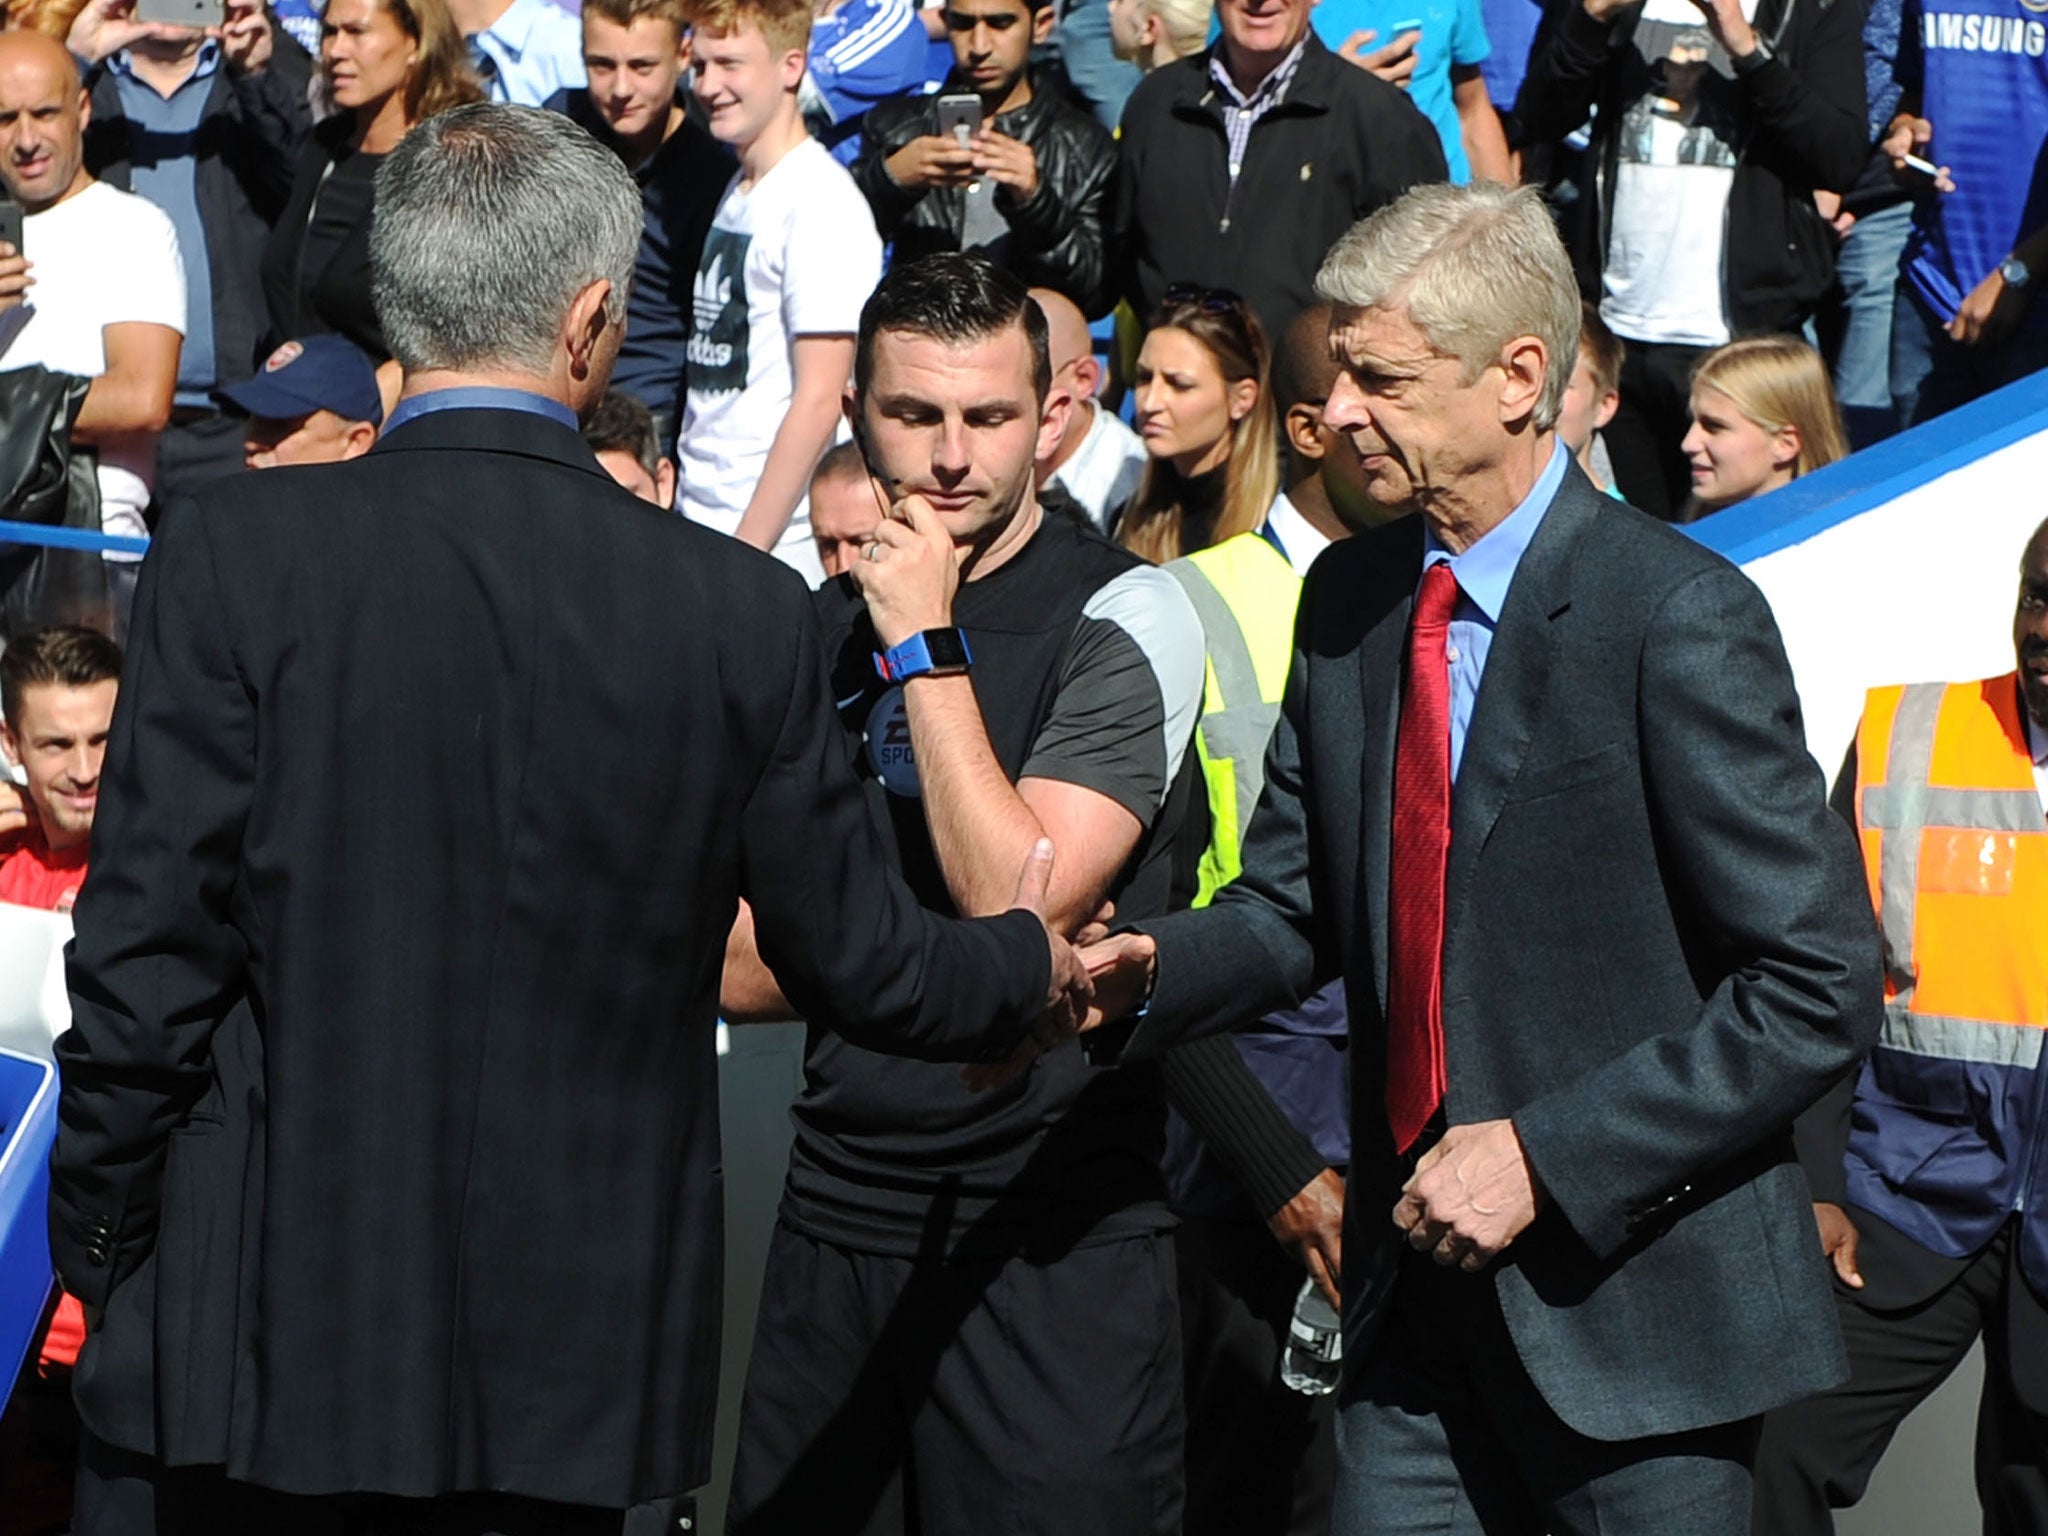 Jose Mourinho and Arsene Wenger shake hands prior to kick off